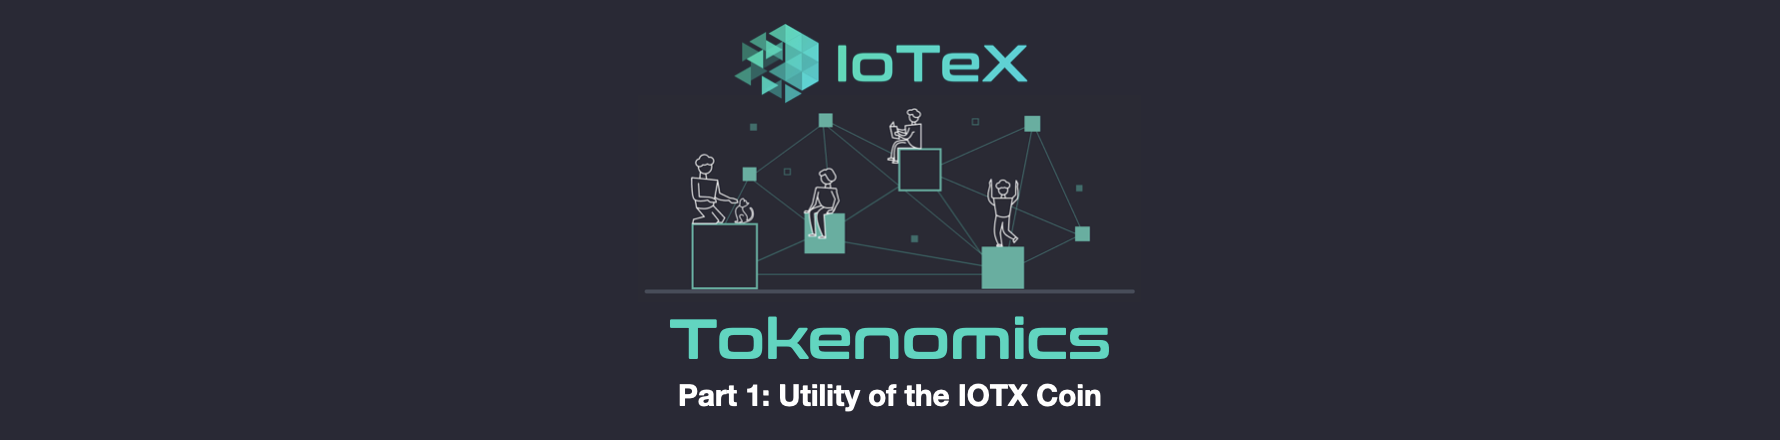 IoTeX Tokenomics — Part 1: Utility of the IOTX Coin